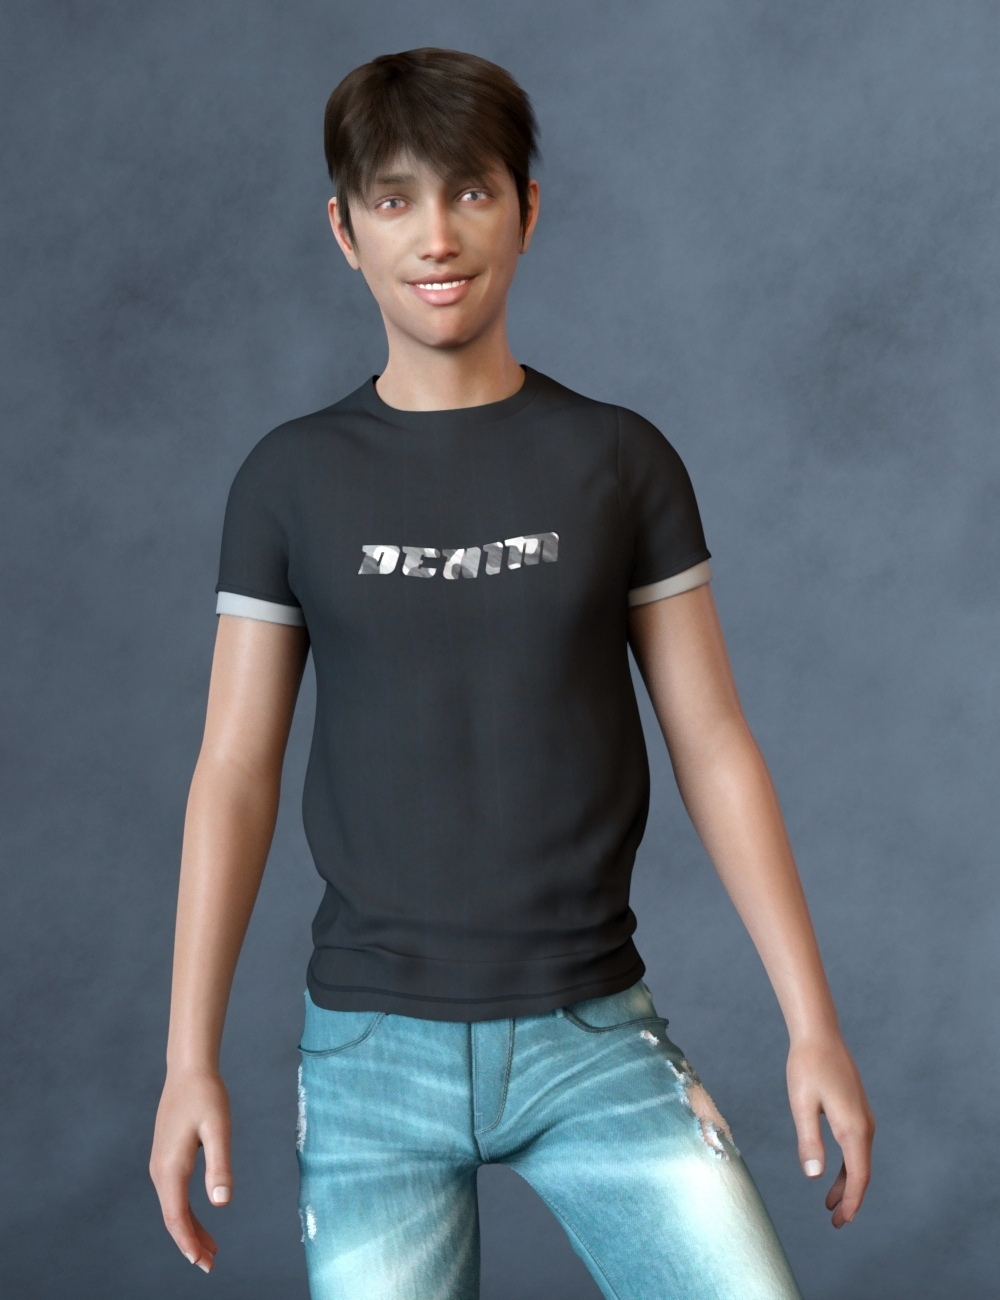 Trevor for Genesis 8 Male by: SF-Design, 3D Models by Daz 3D